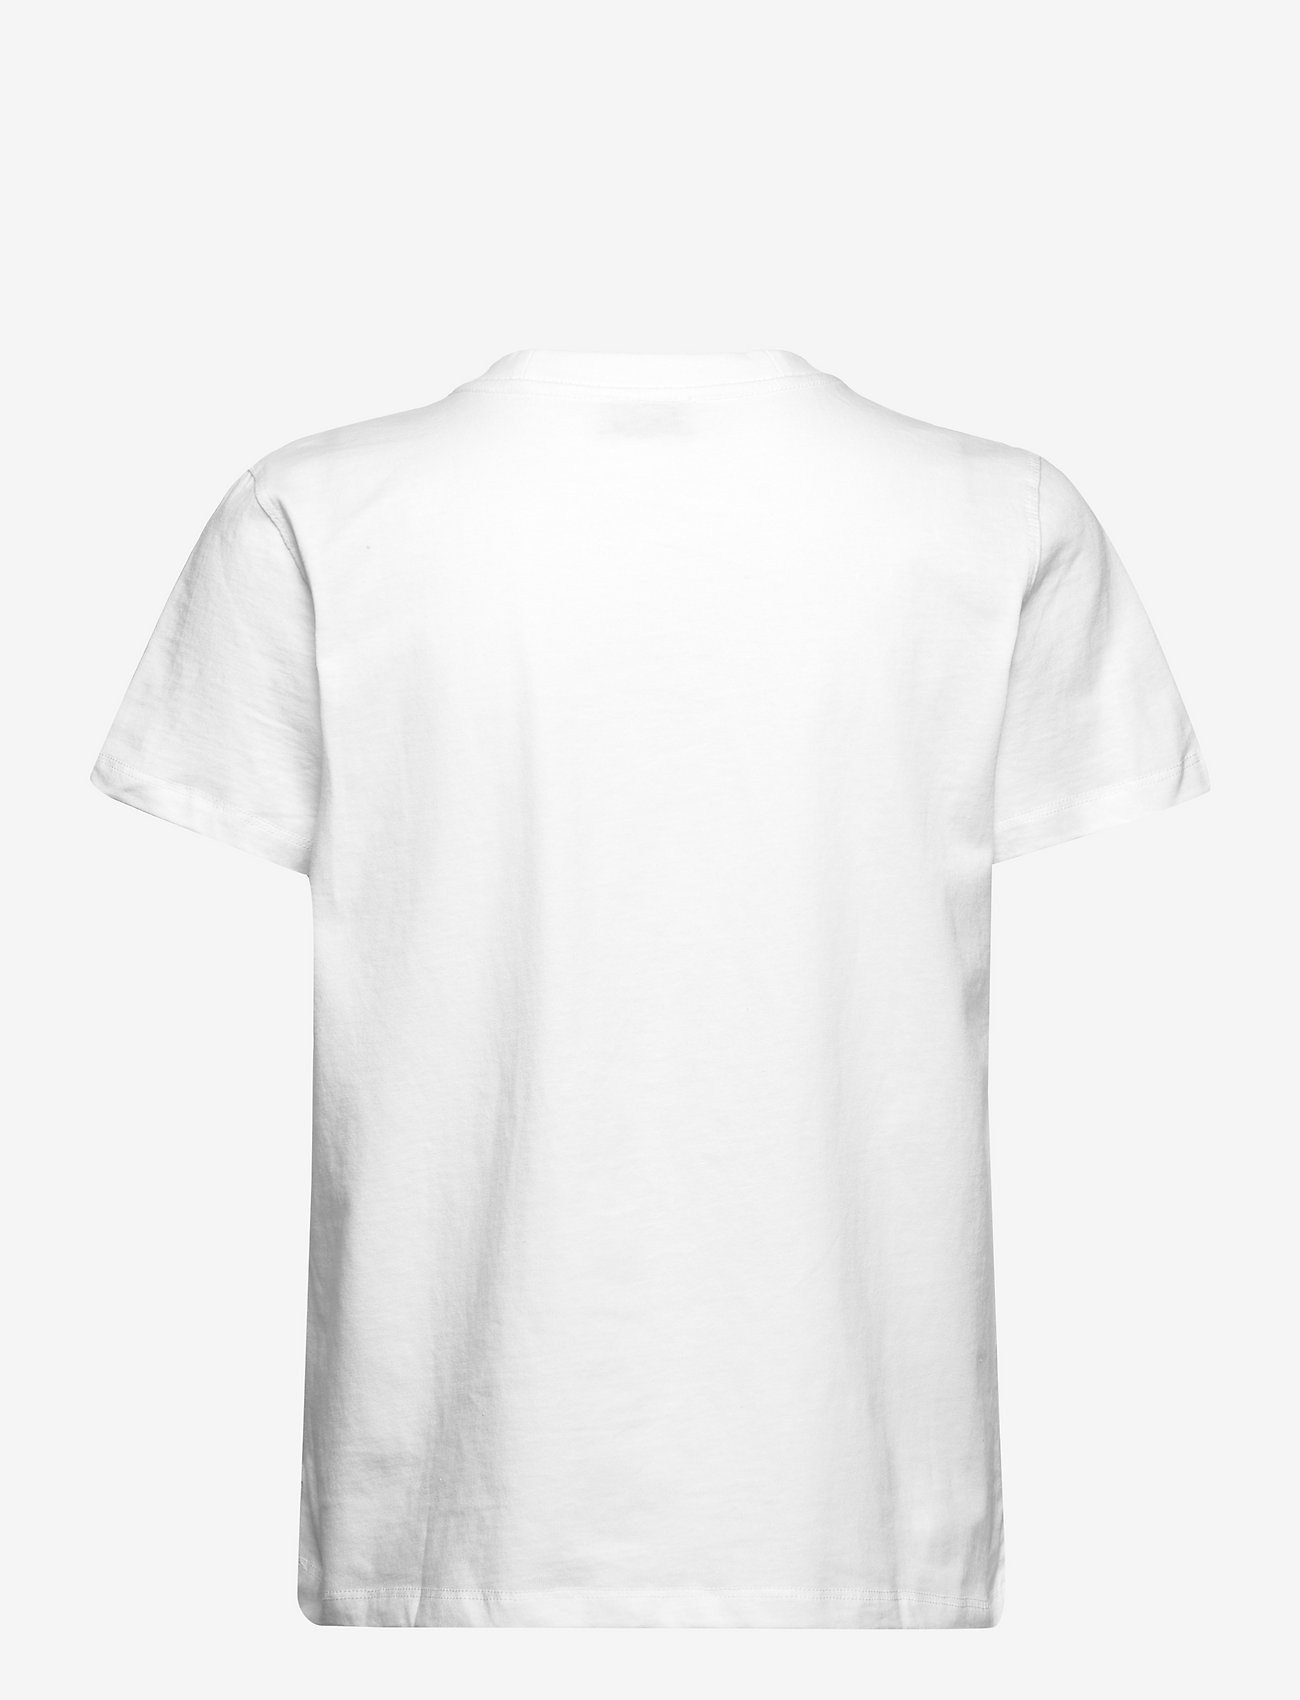 Enkel Studio - Organic t-shirt - t-shirts - new white - 1